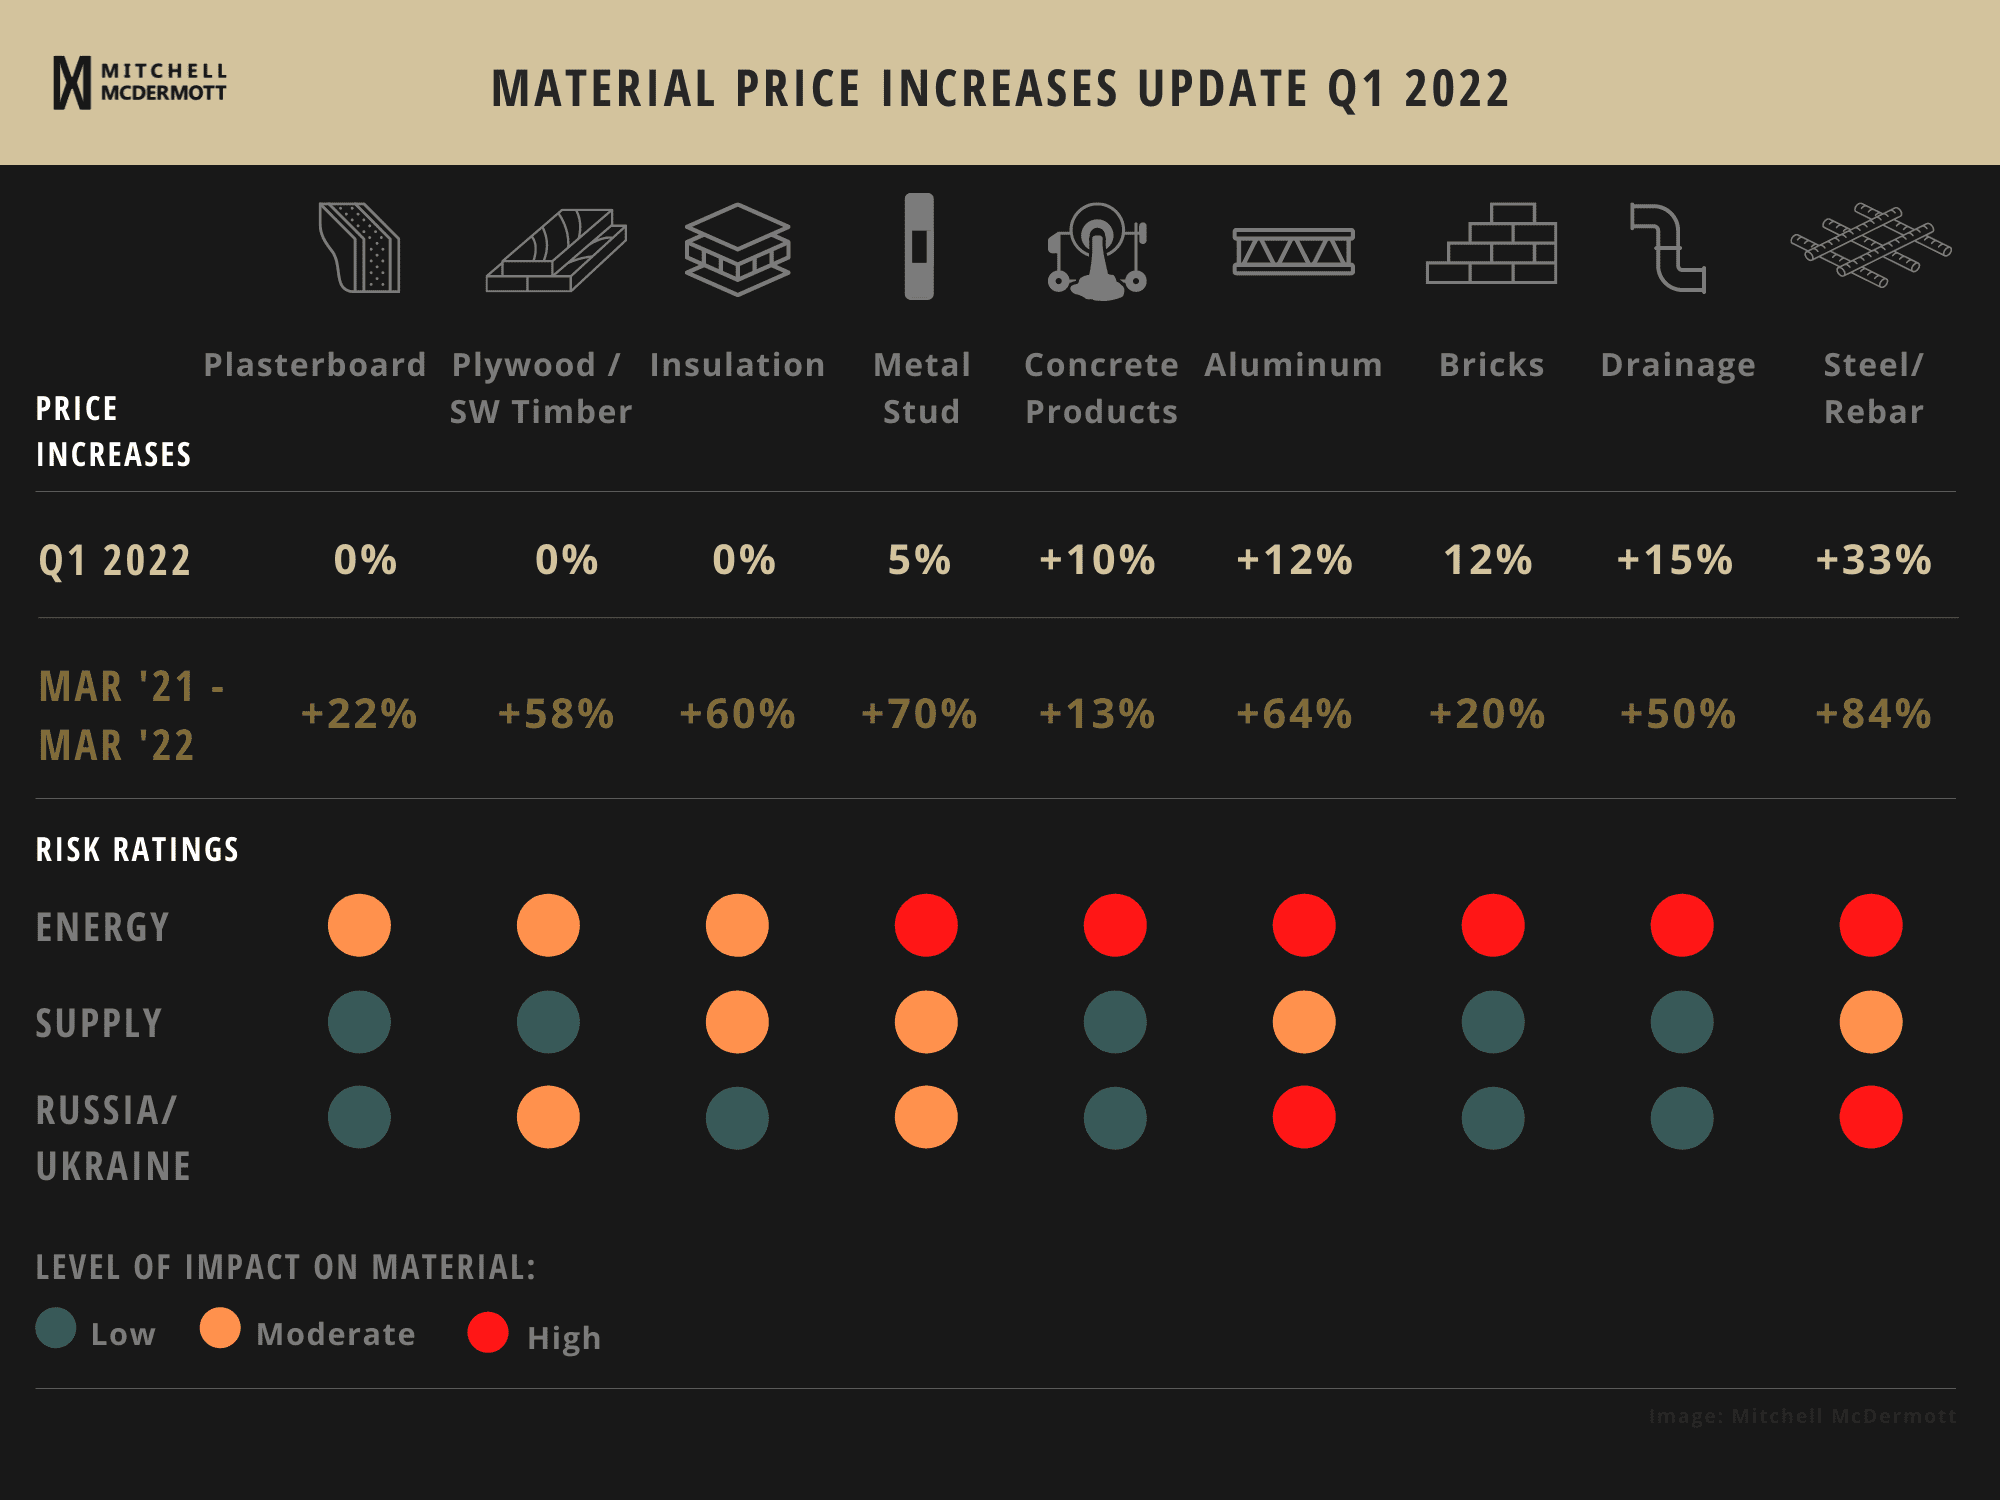 Material price increases update Q3 2021